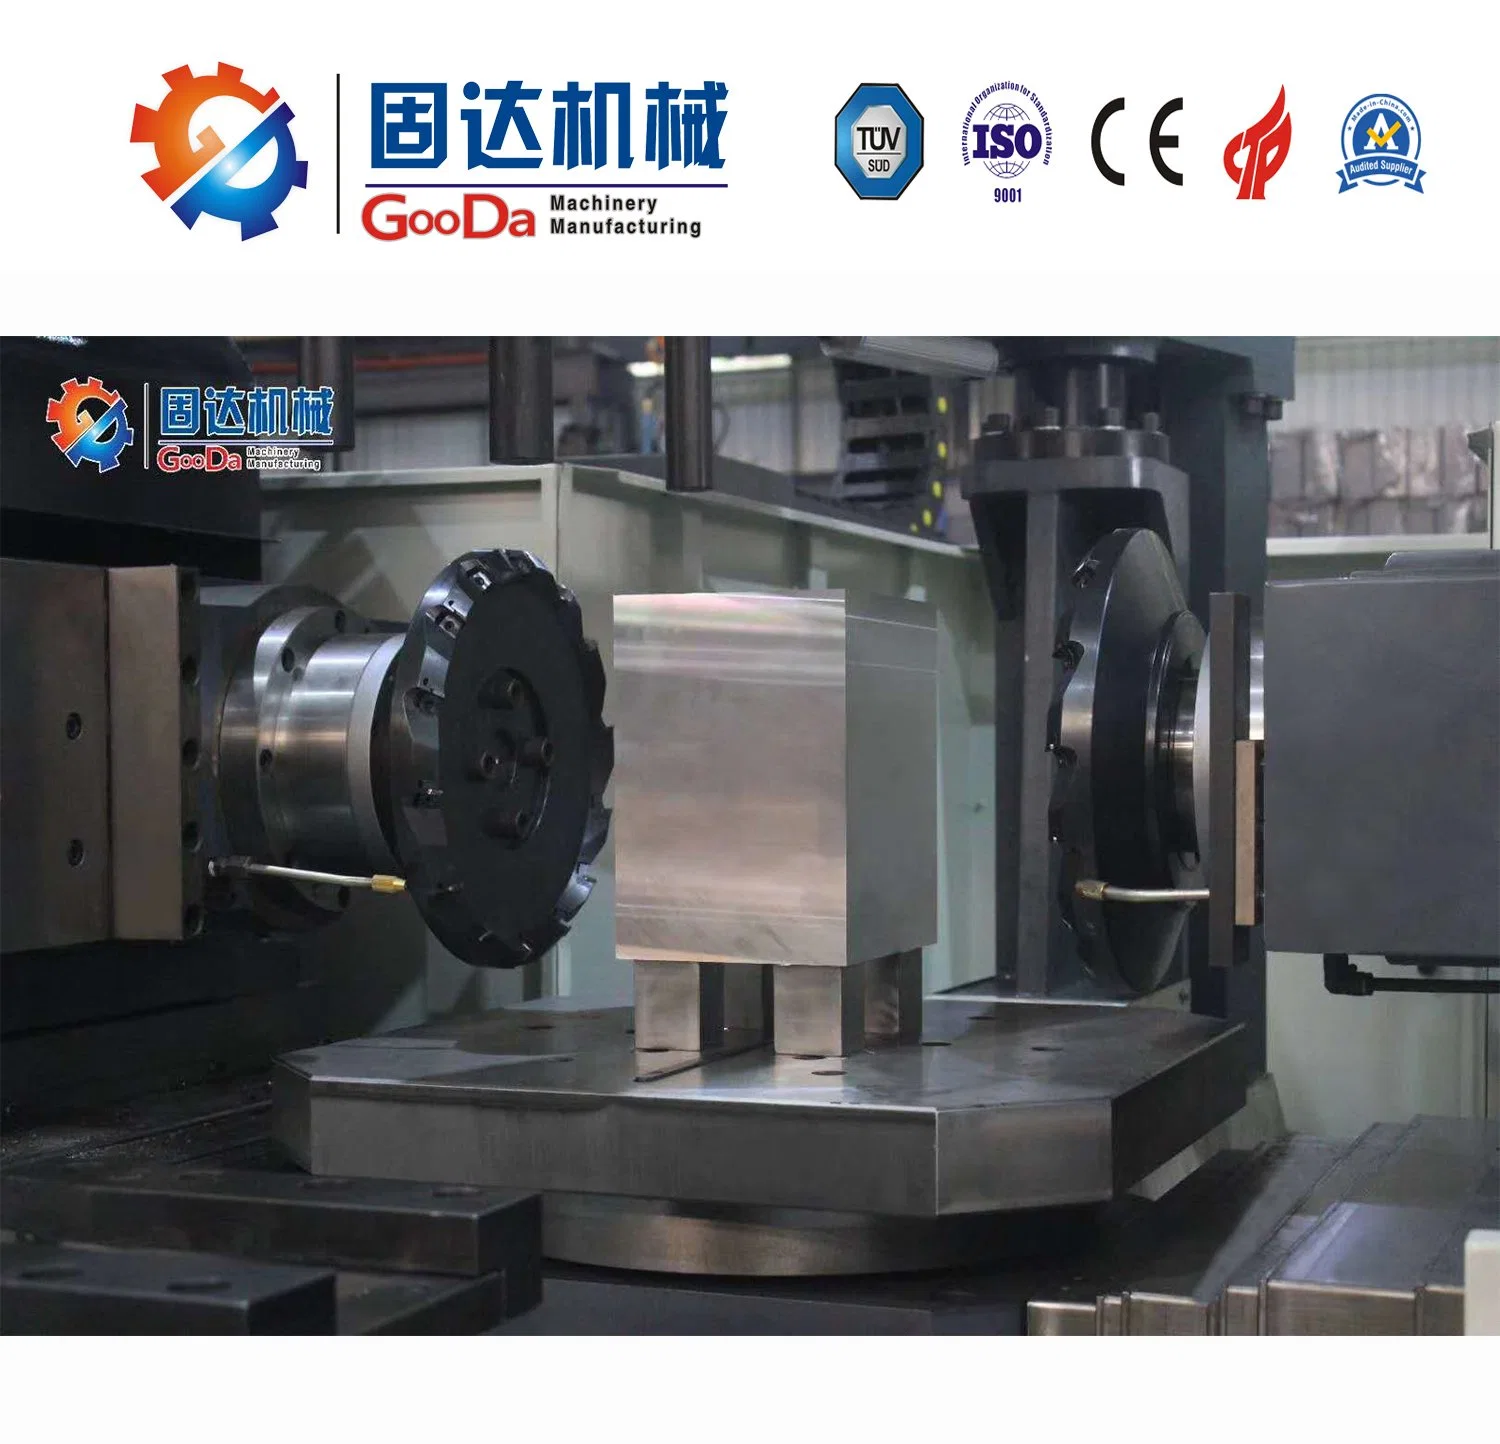 CNC Heavy Duty Duplex&#160; Milling Machine-Double-Sided Milling Machine-Square Mold Milling Machine-Gooda Custom HMI (Human&Machine Interface) -Rotary Table